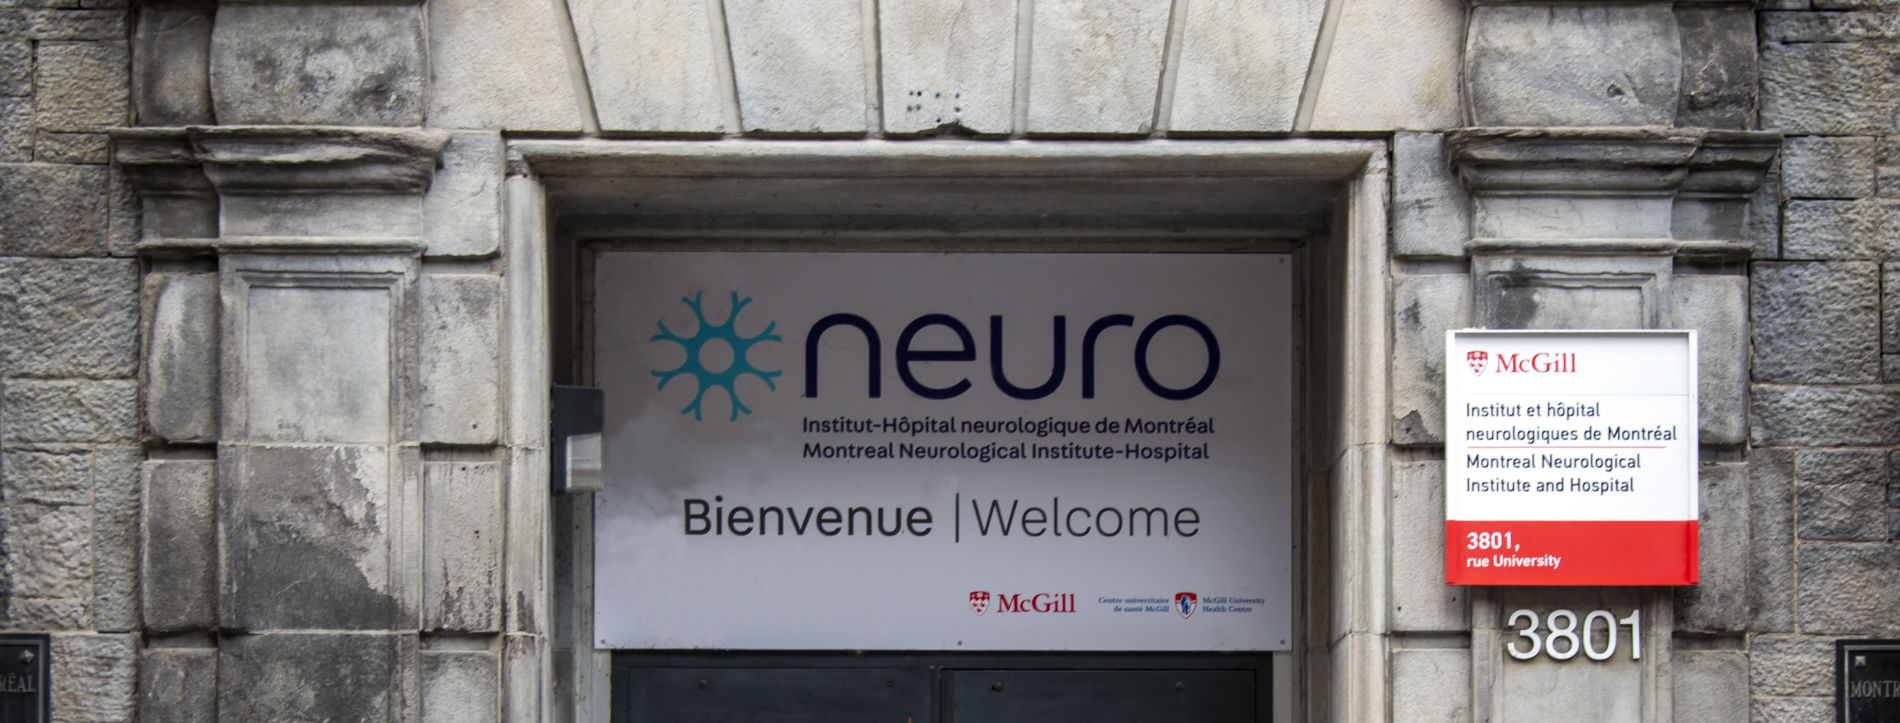 The Neuro's entrance